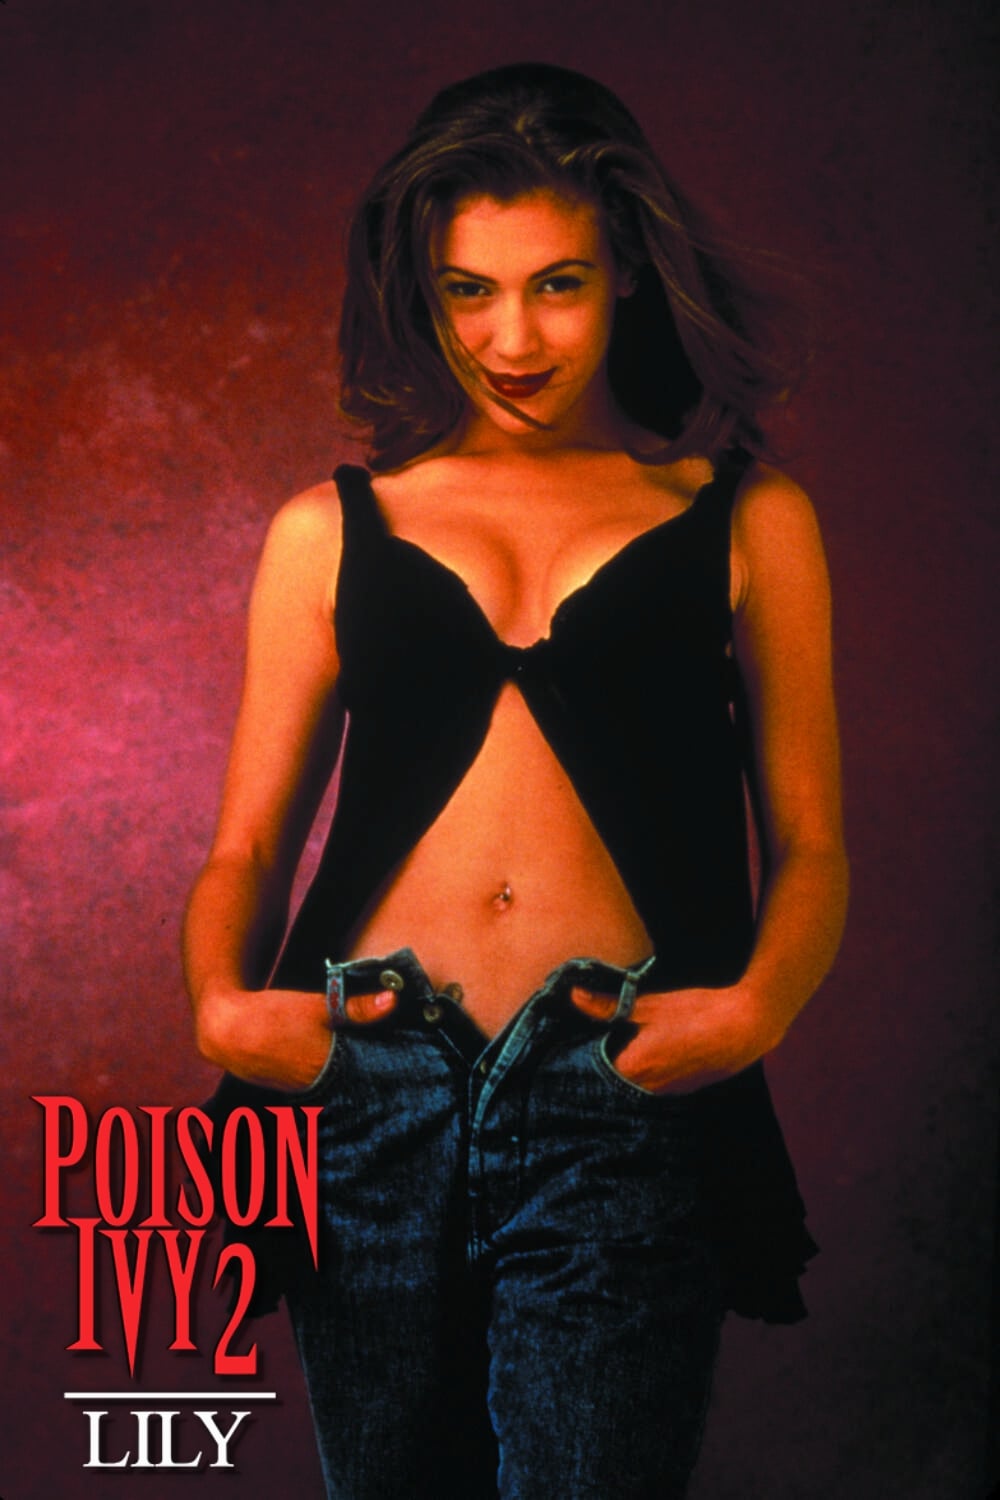 poison ivy 2 lily imdb